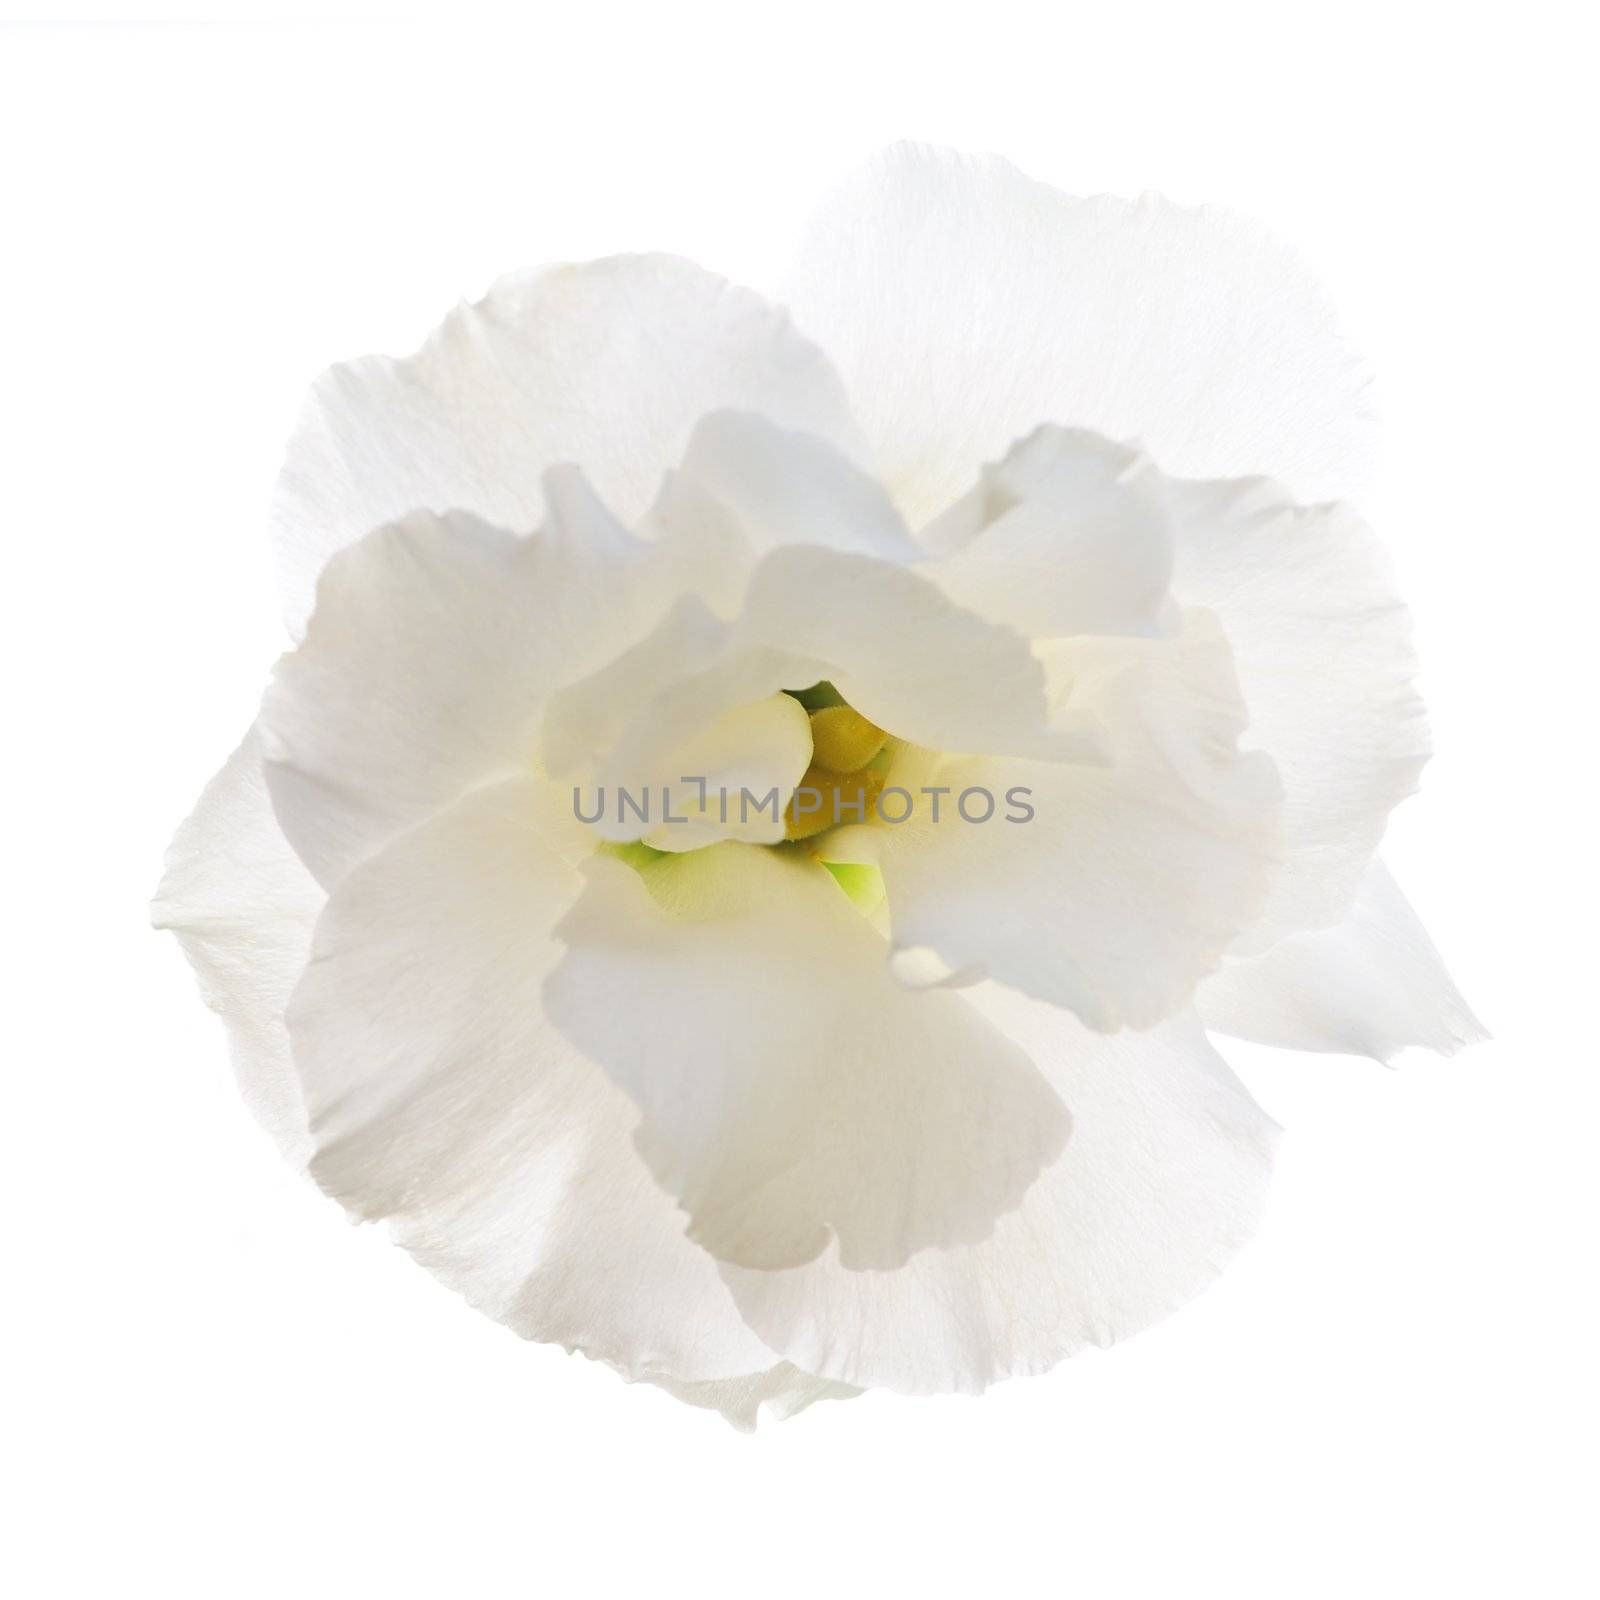 Isolated white flower by elenathewise